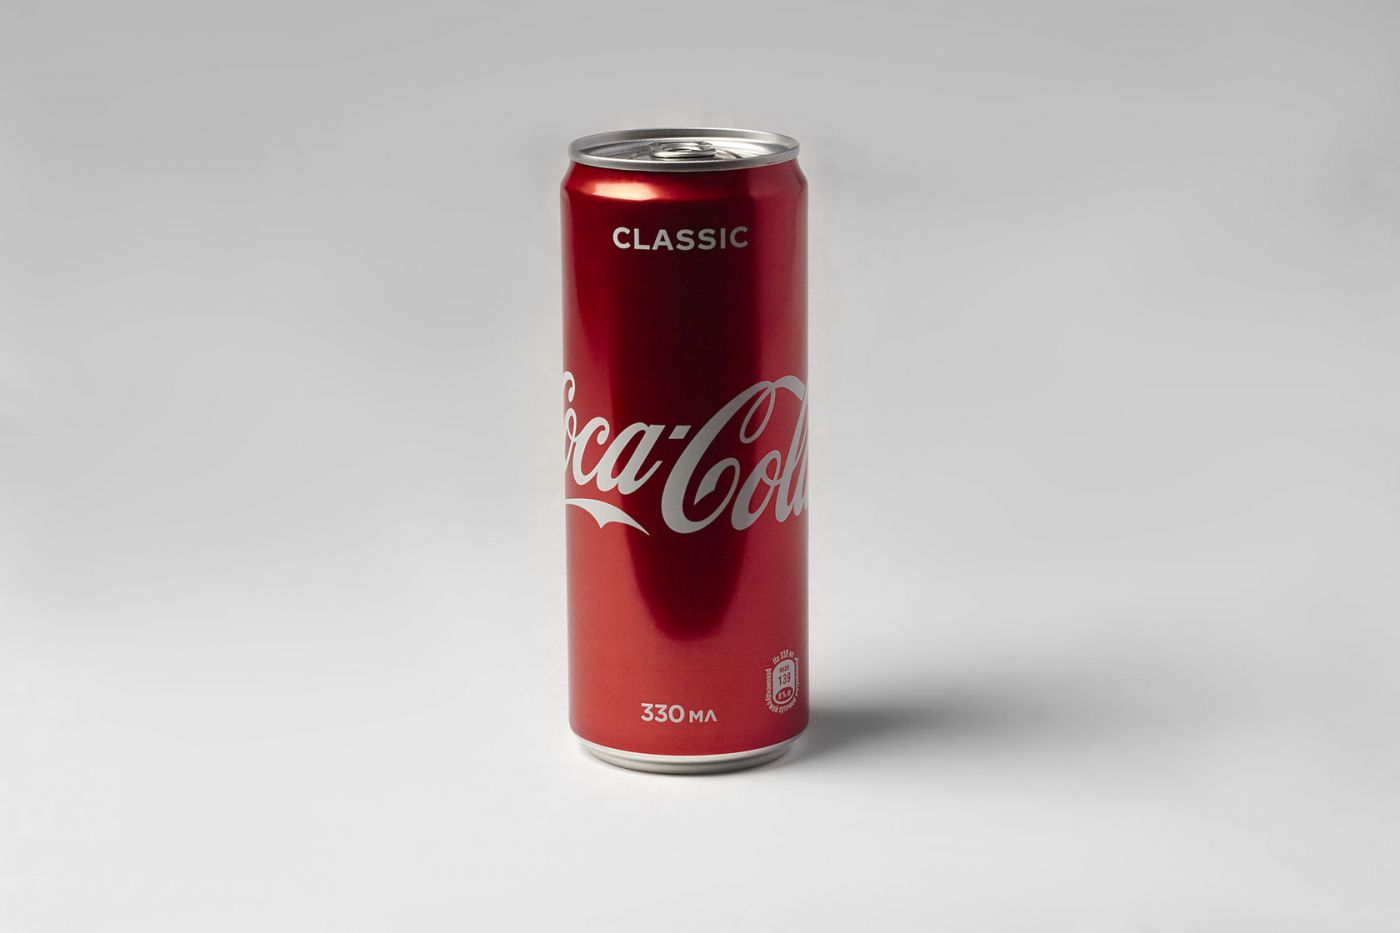 Coca – cola